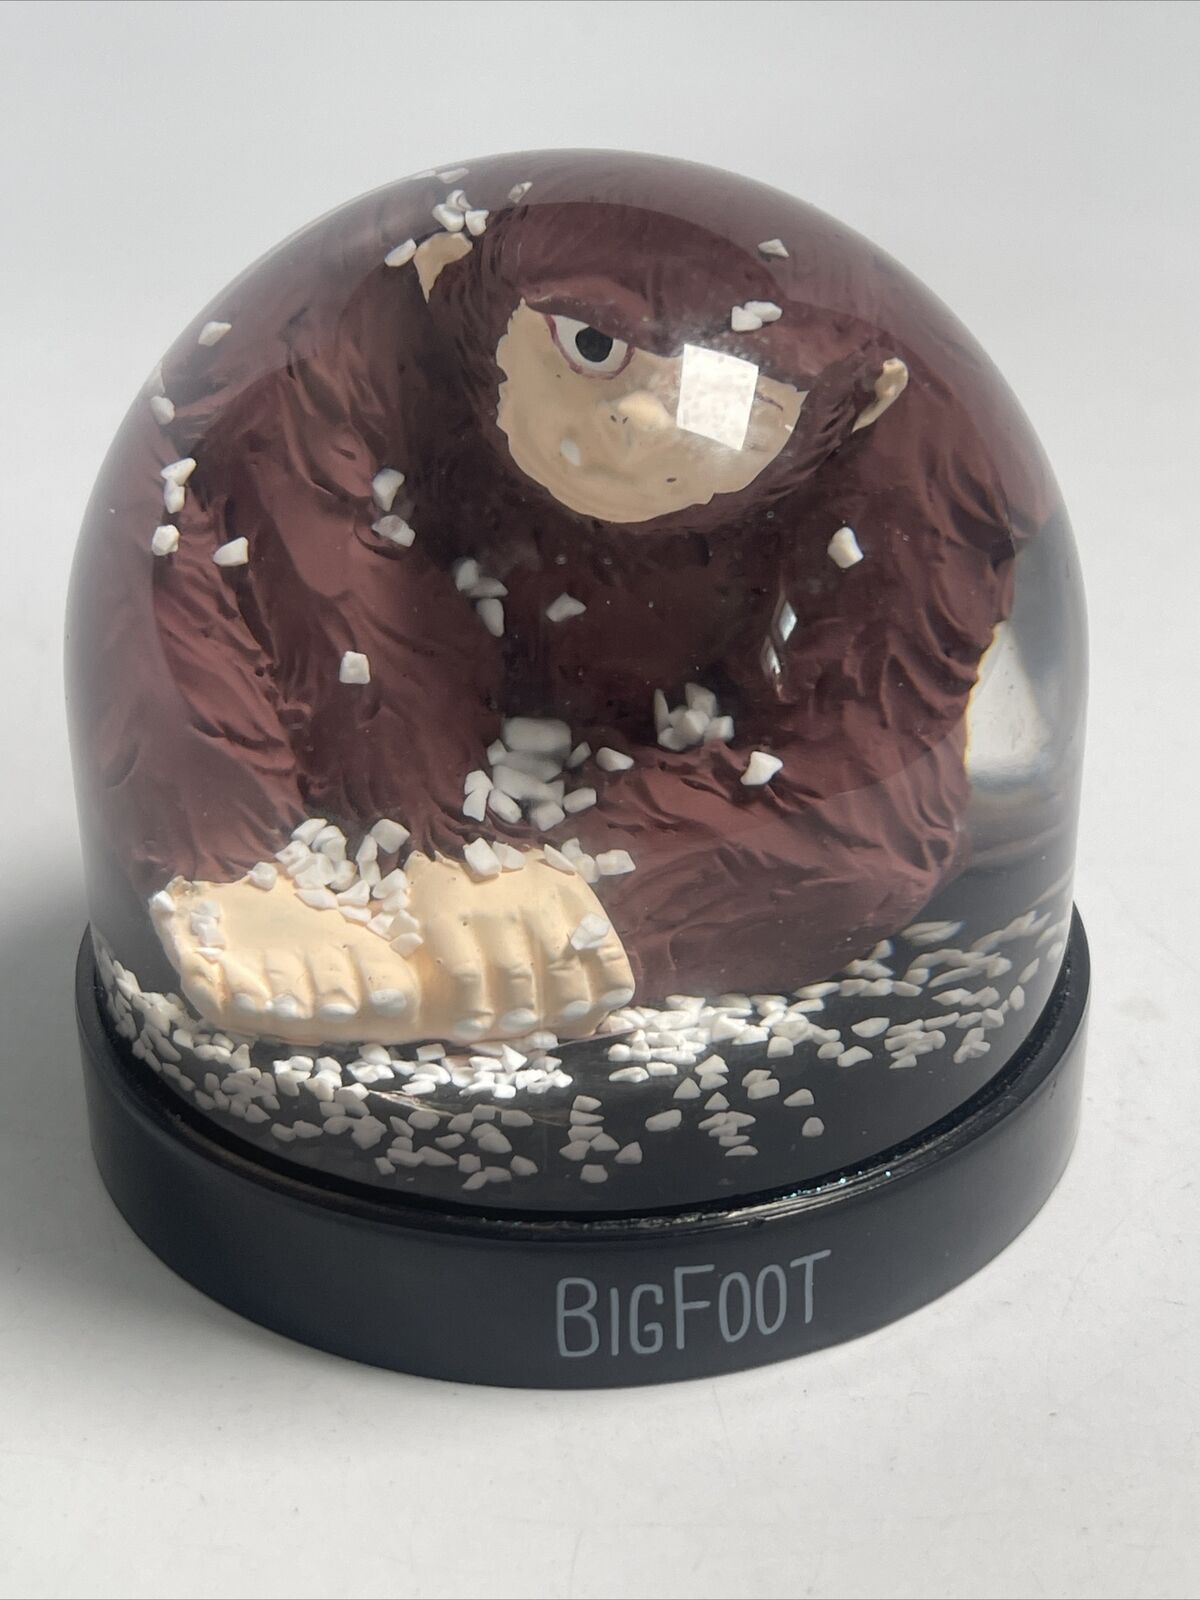 Vintage Bigfoot Snow Globe 3” Sasquatch Yeti Mystery Gag Tourist